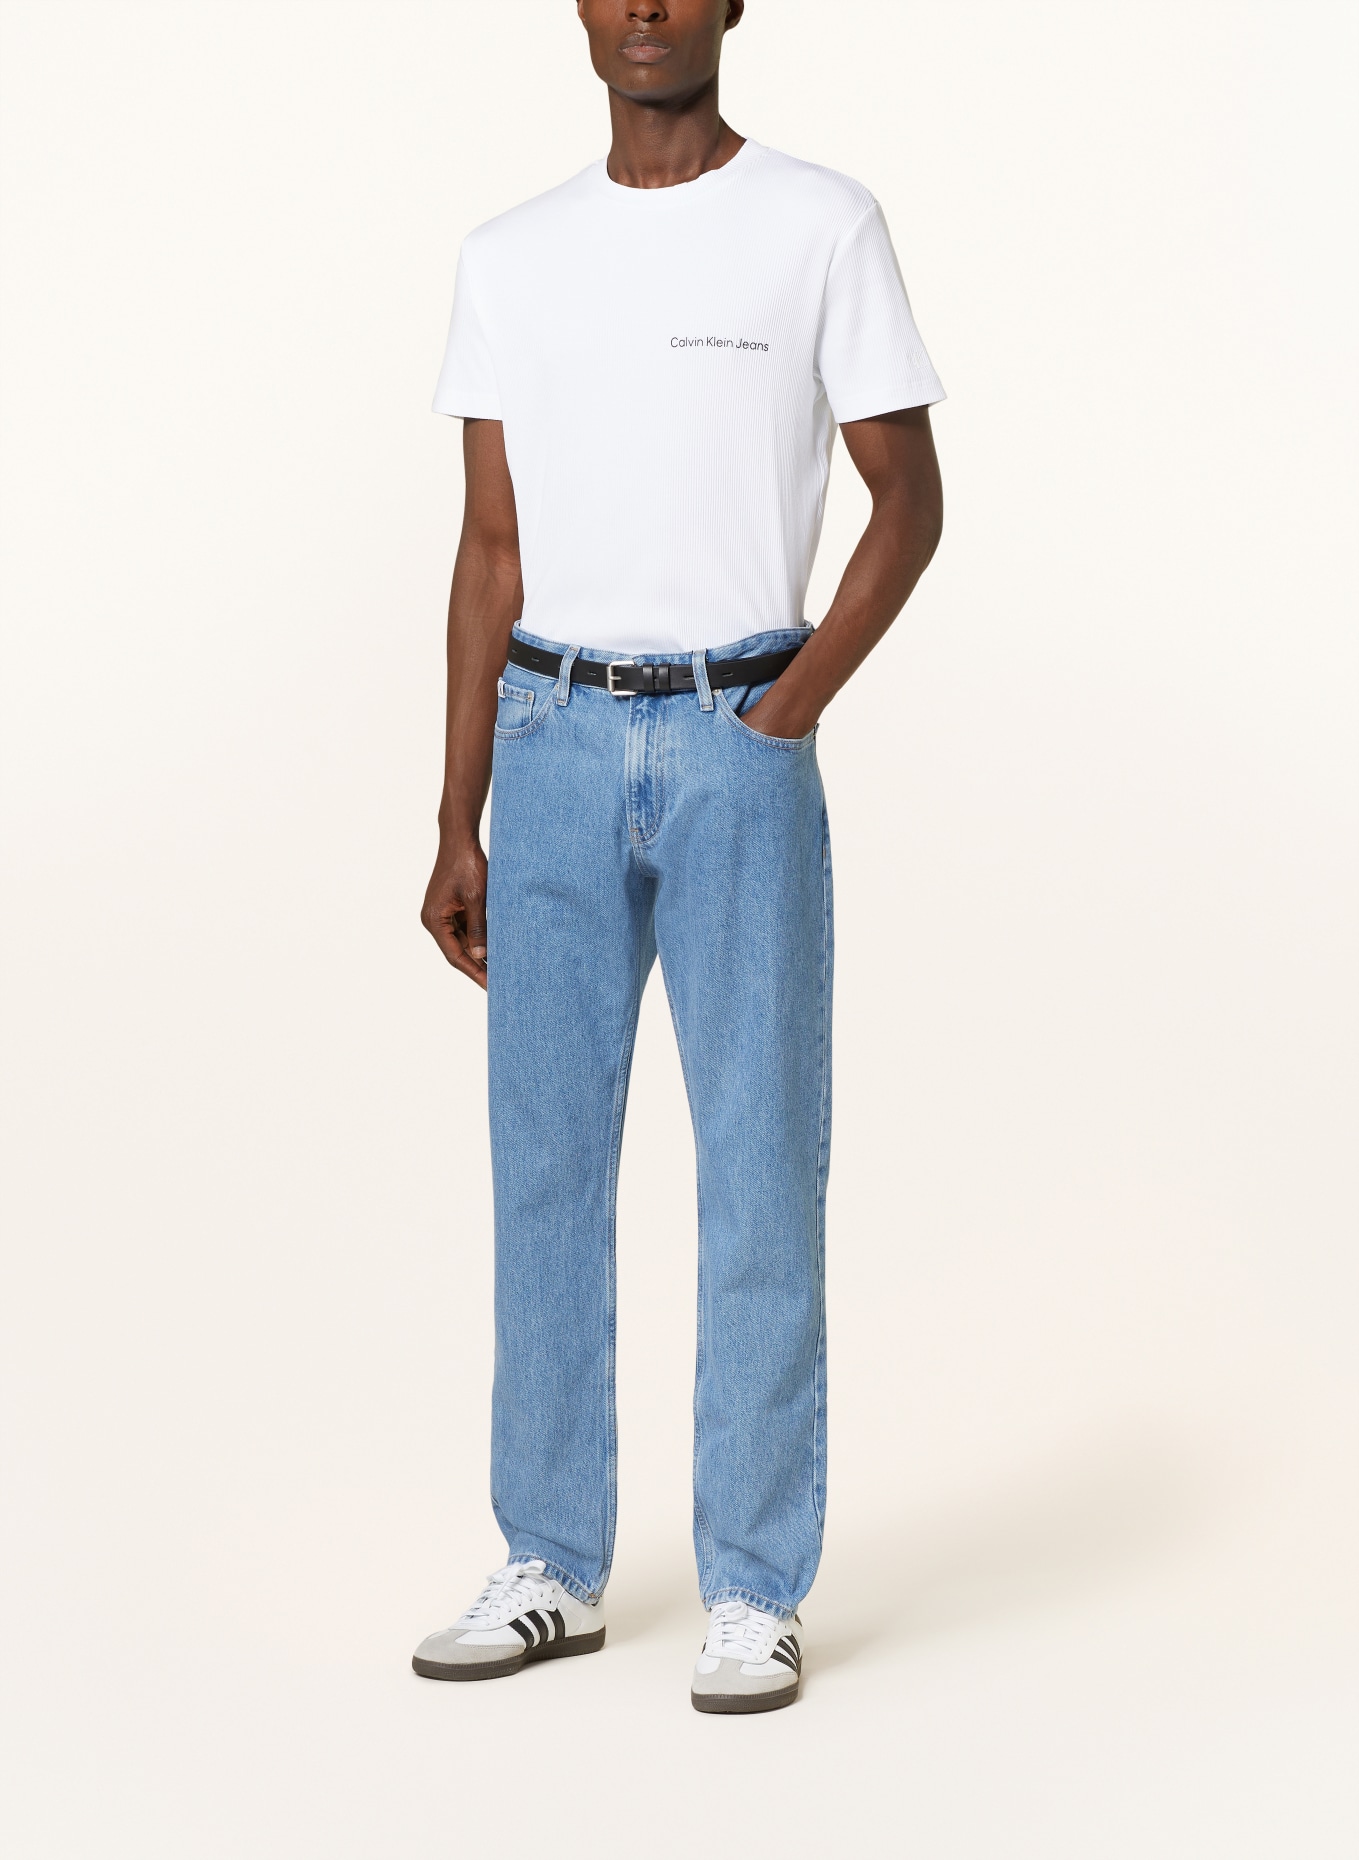 Jeans weiss Calvin in Klein T-Shirt